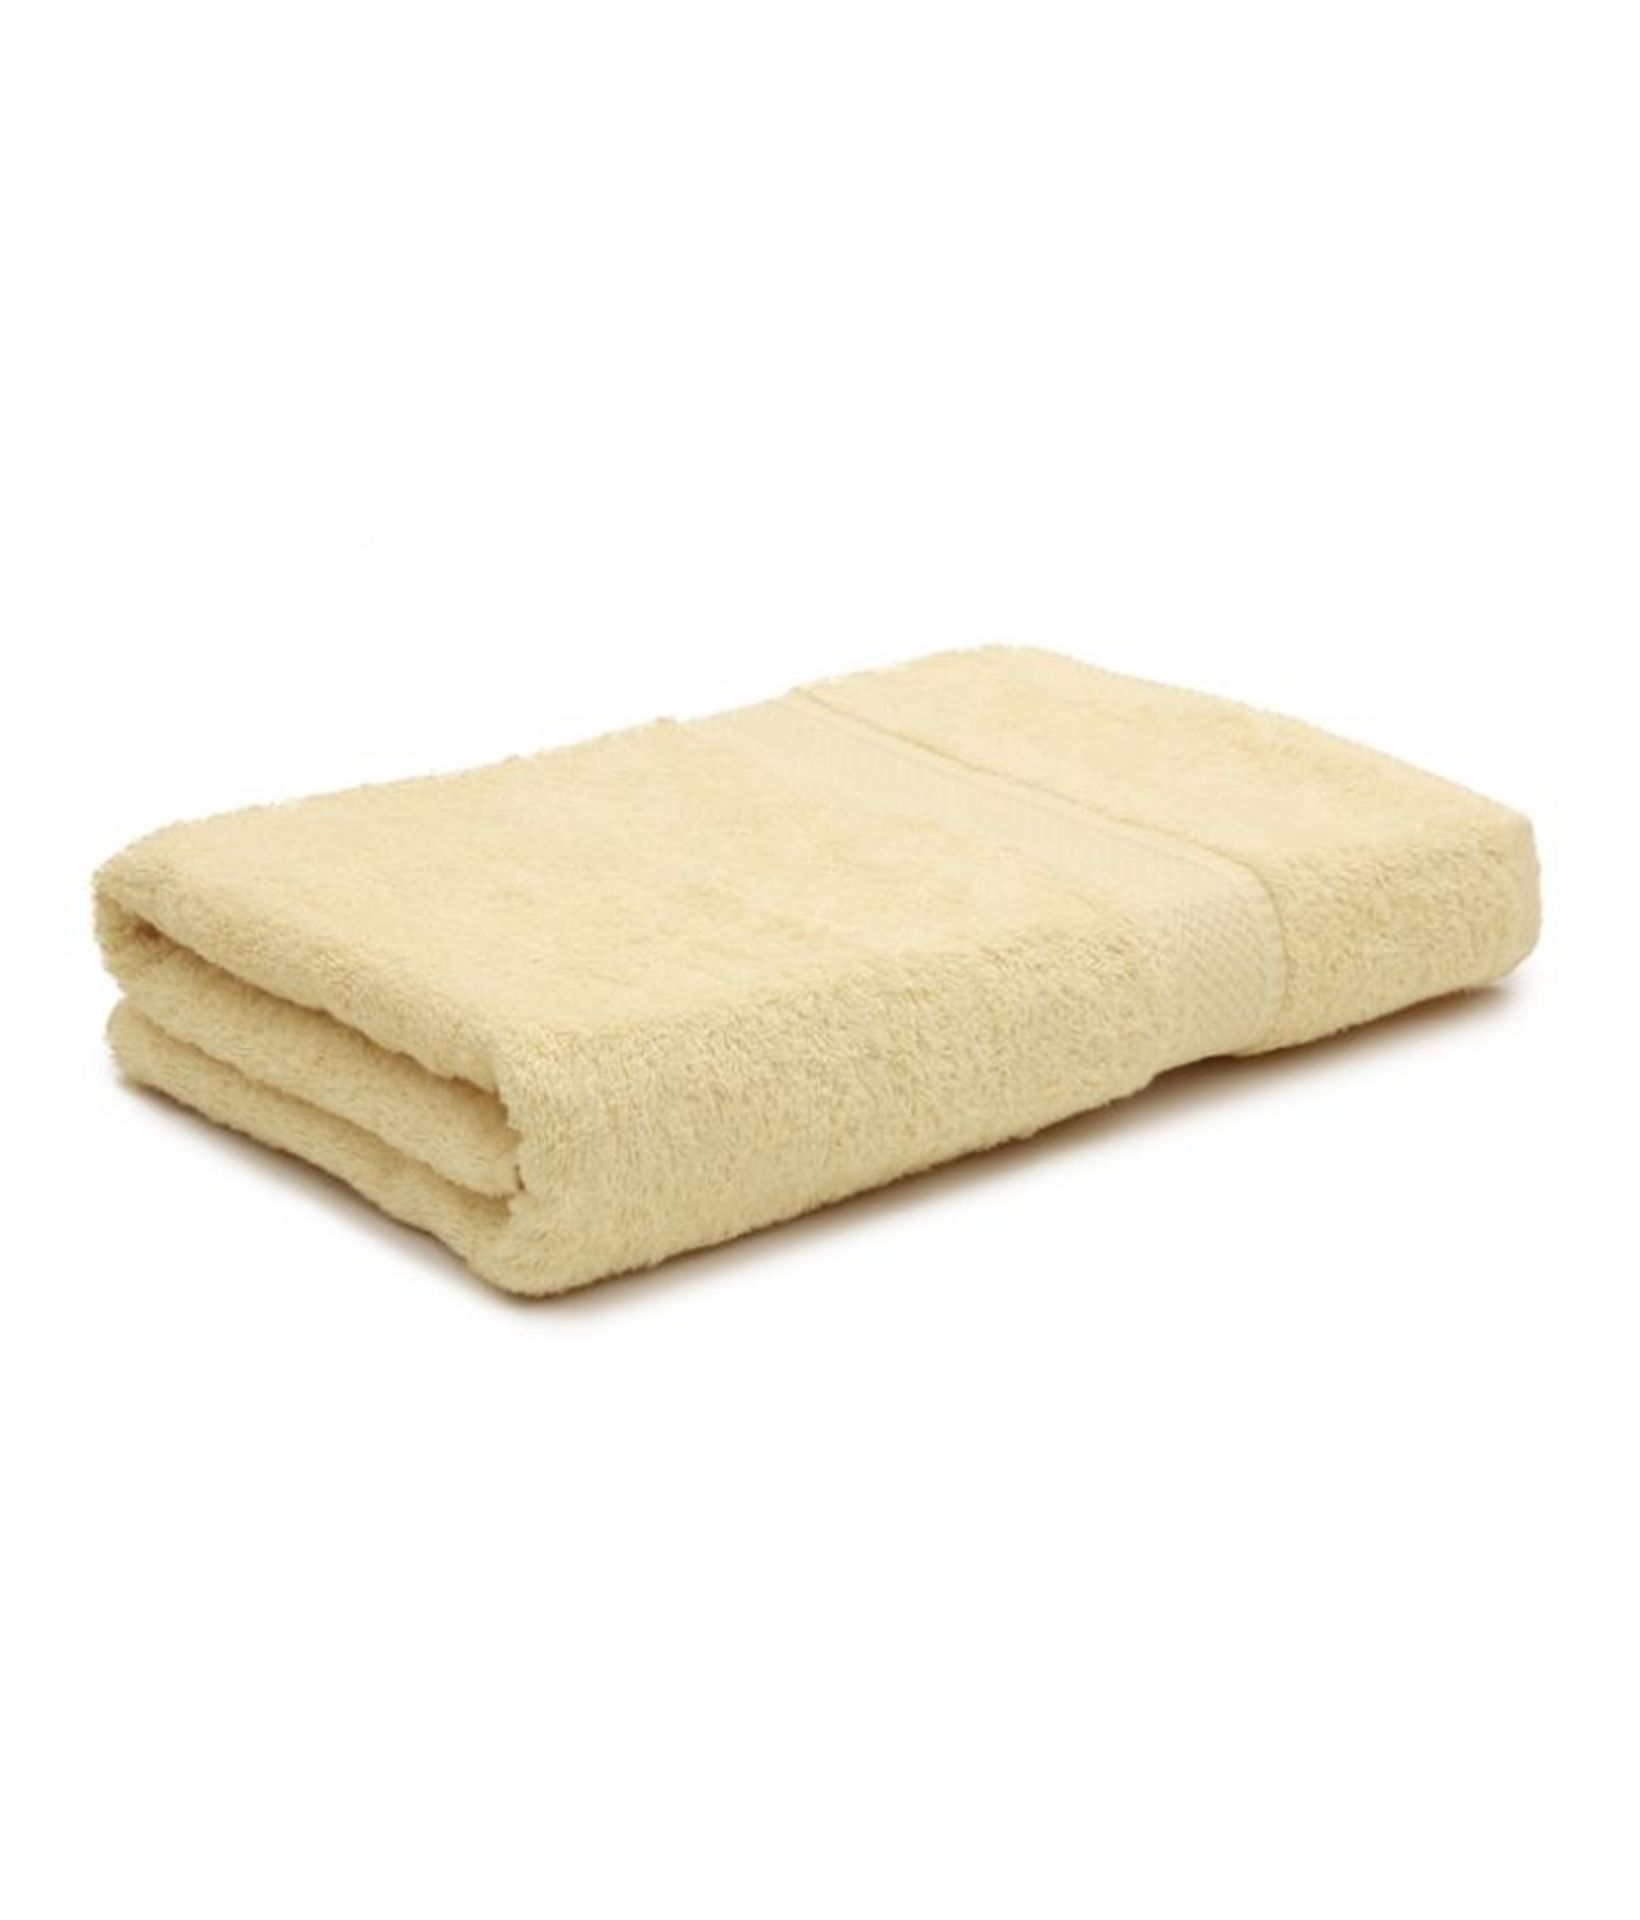 V *TRADE QTY* Brand New 100% Cotton Bath Towel 125 x 70 cm - Cream X 6 YOUR BID PRICE TO BE